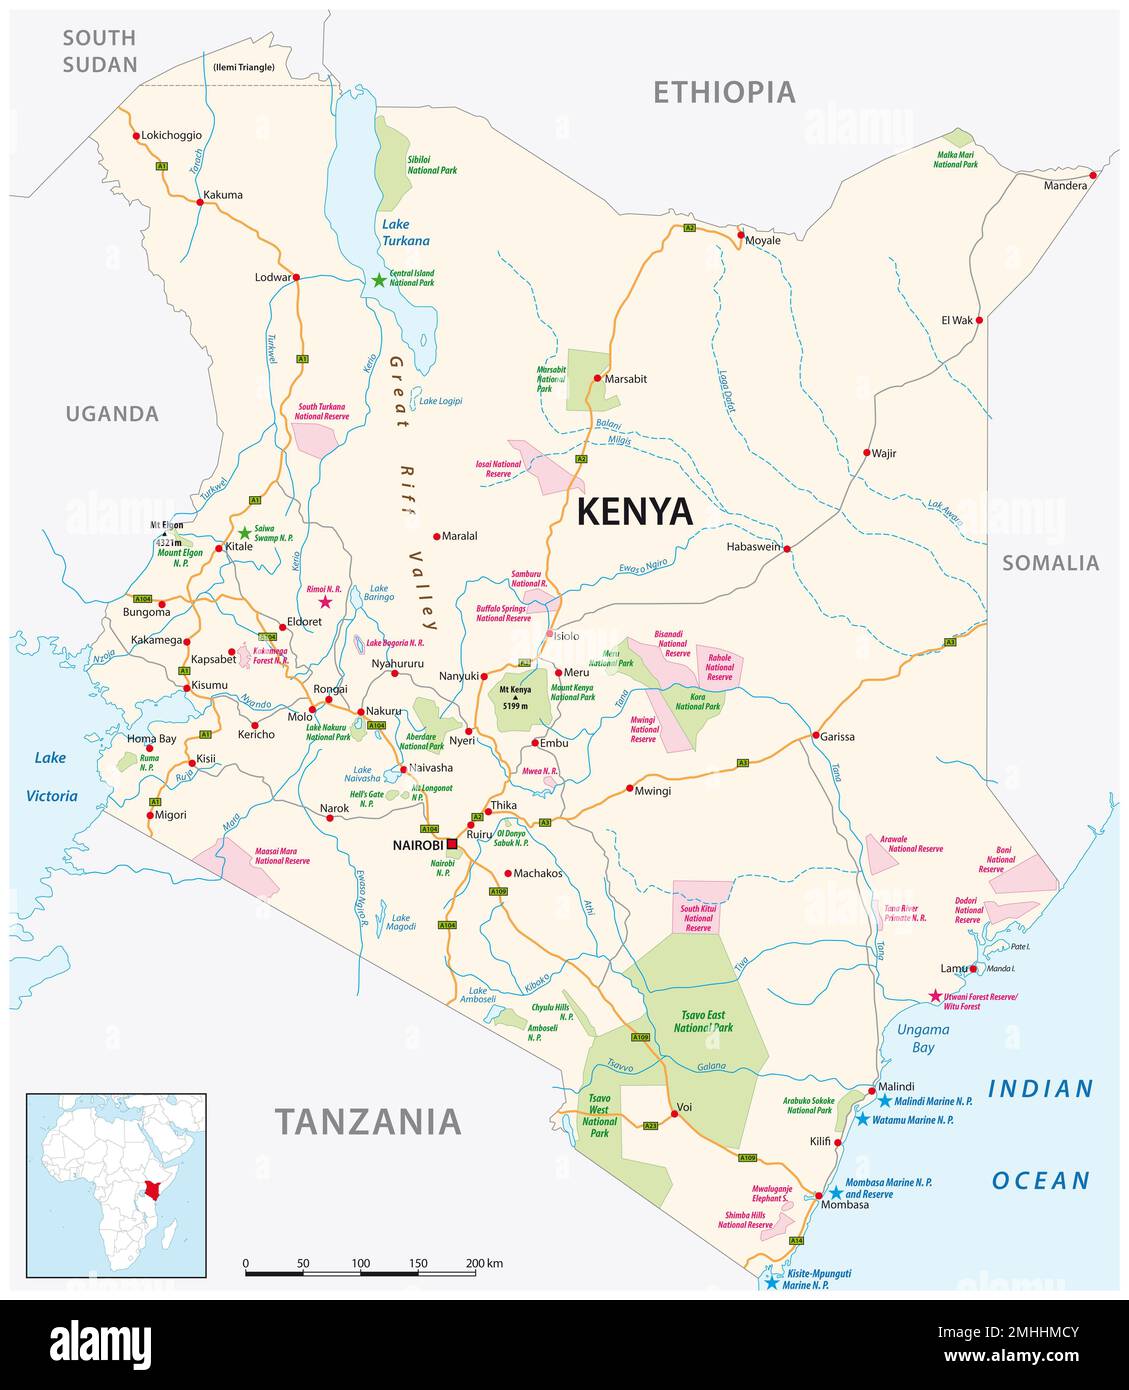 kenya road, national park and national reserve map Stock Photo